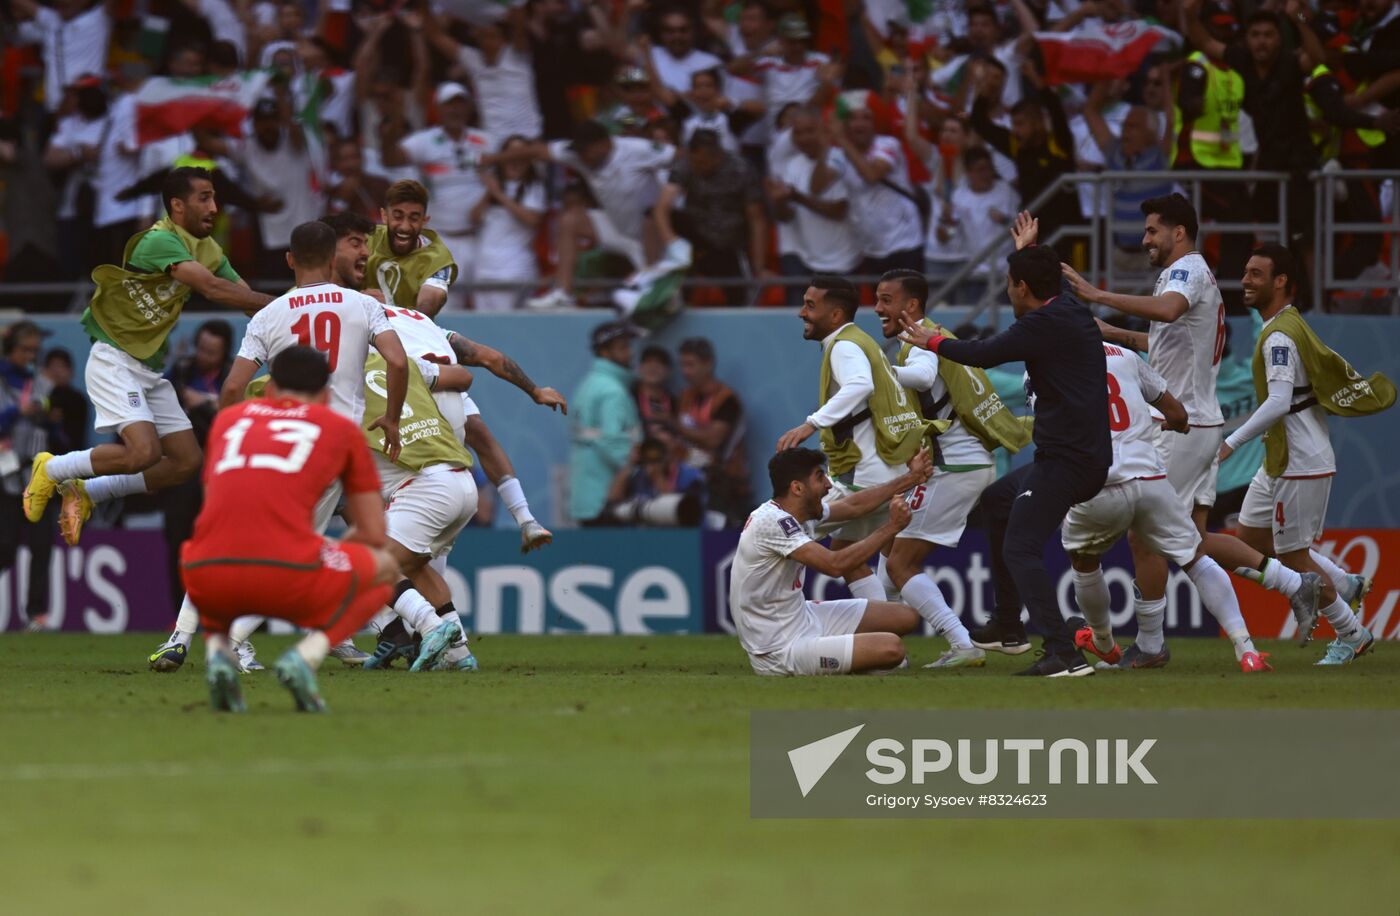 Qatar Soccer World Cup Wales - Iran